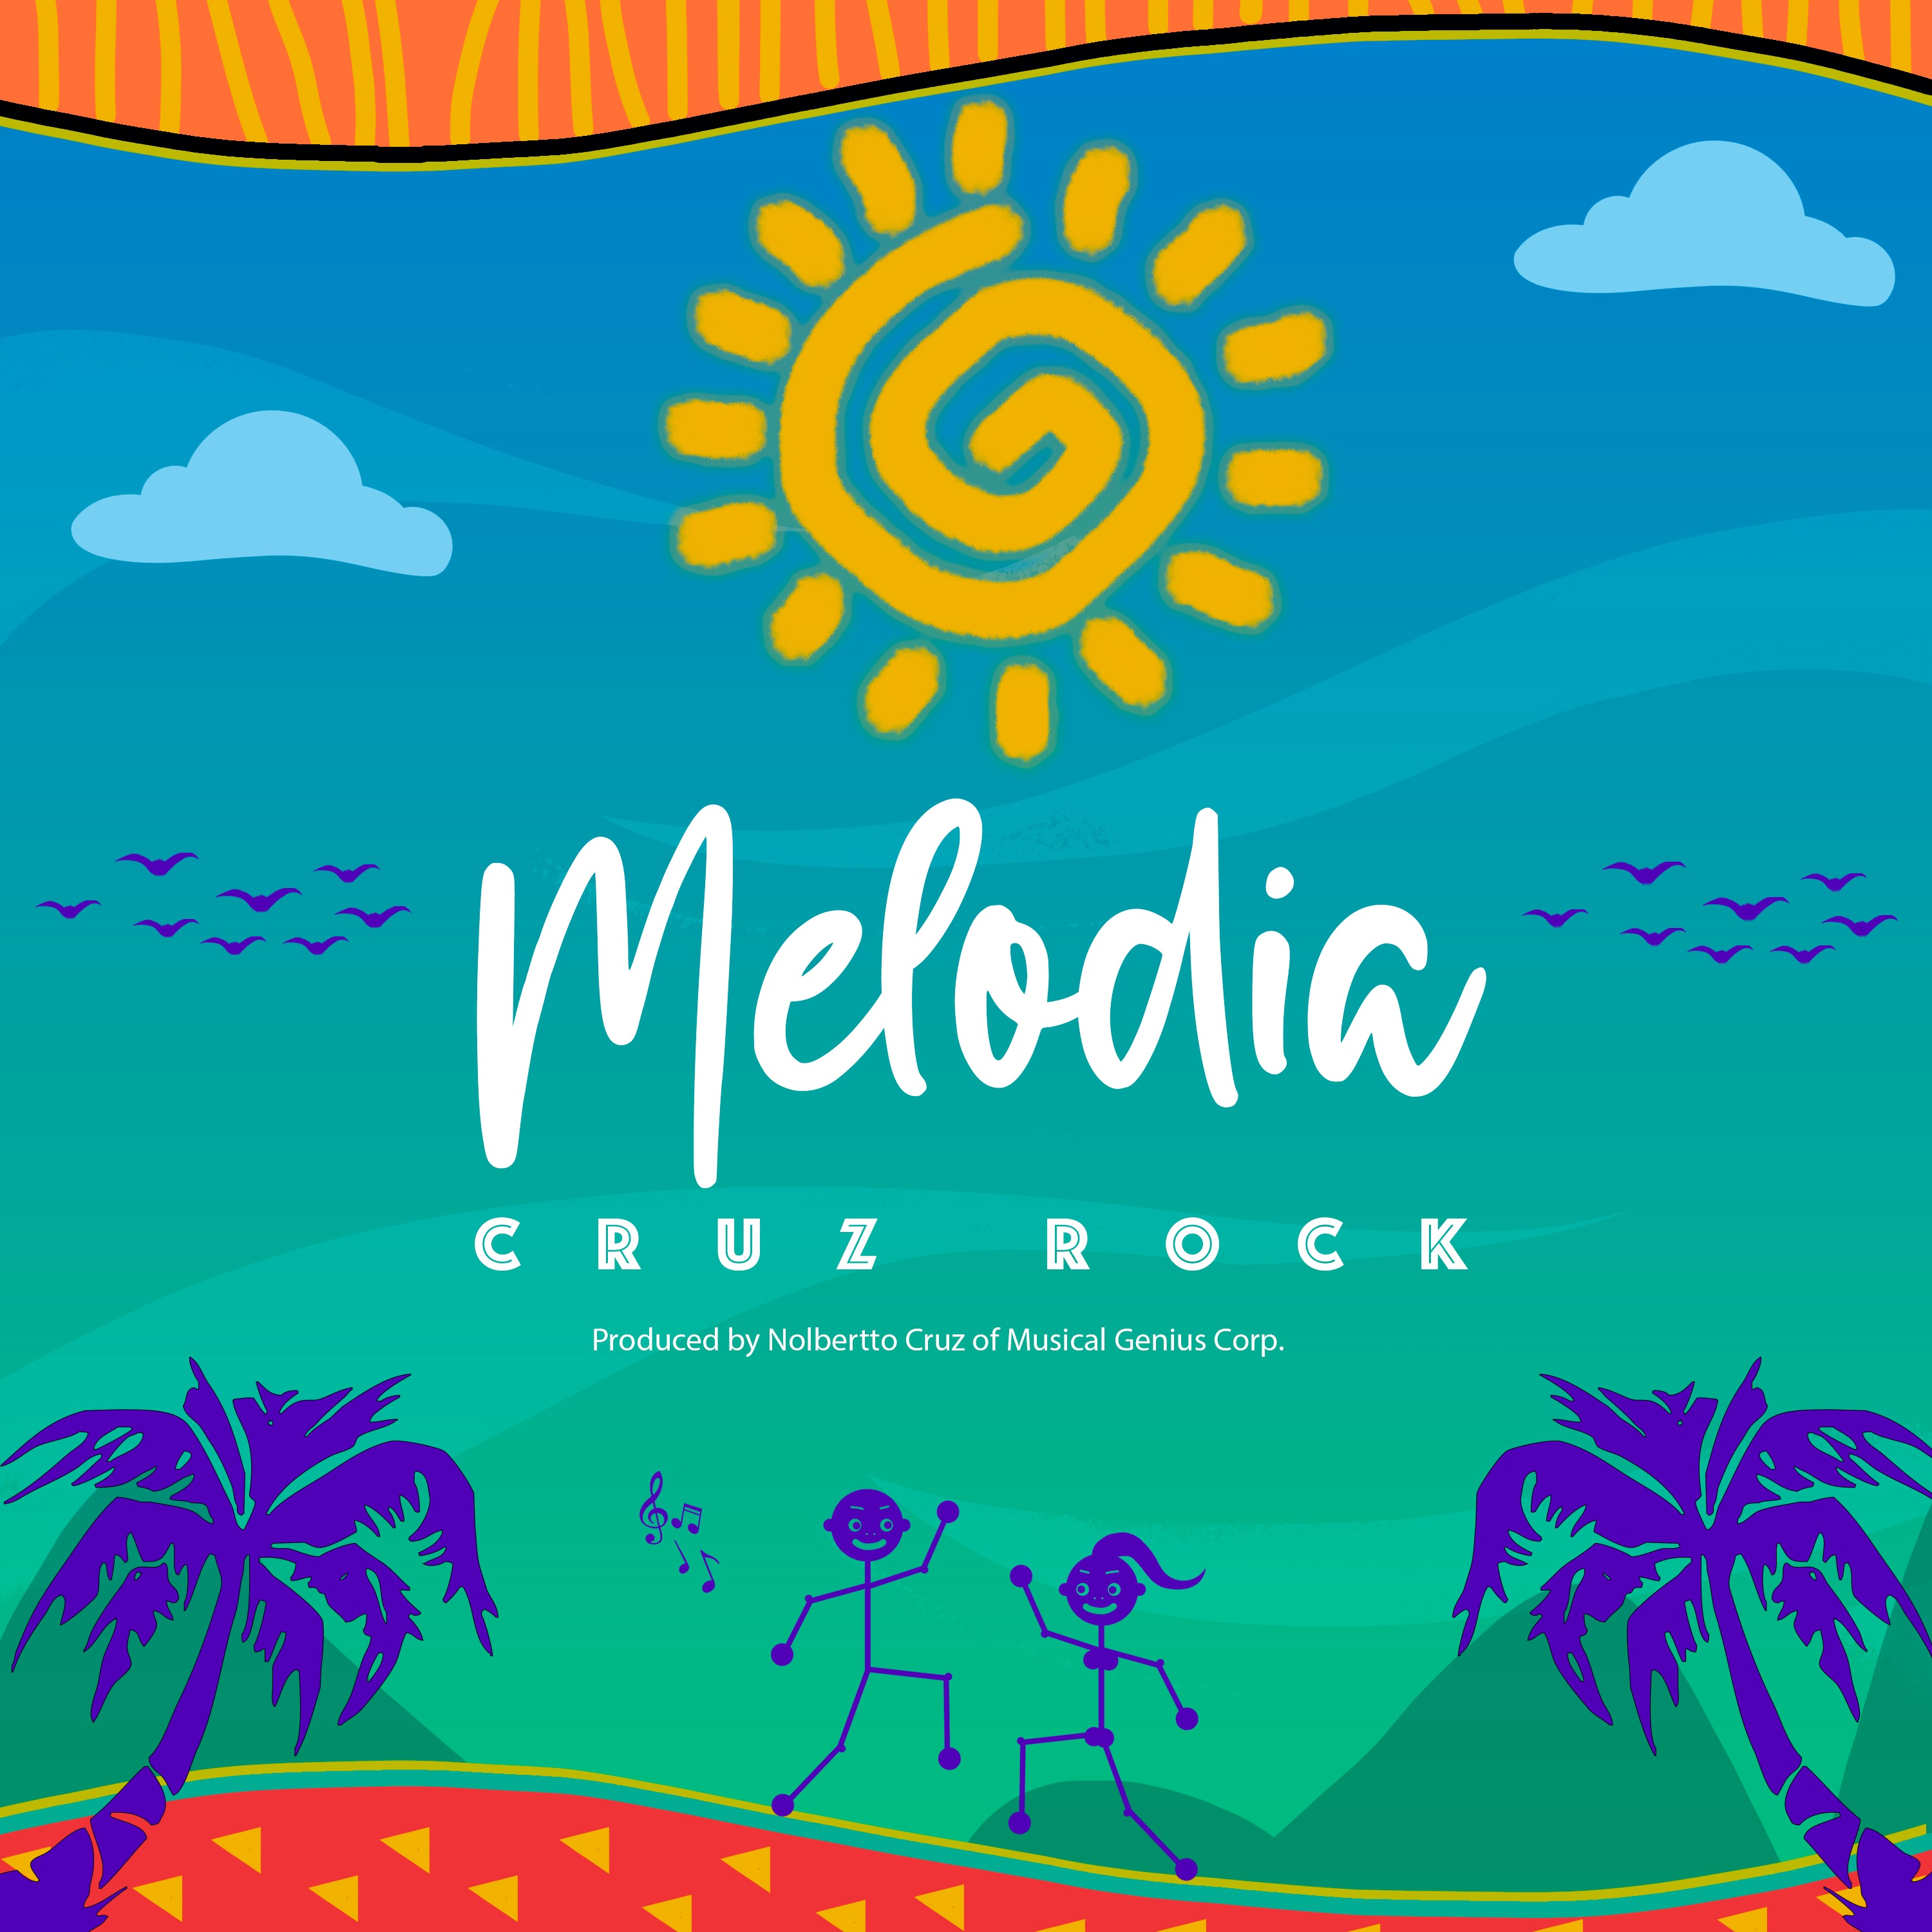 Hent Melodia by Cruz Rock